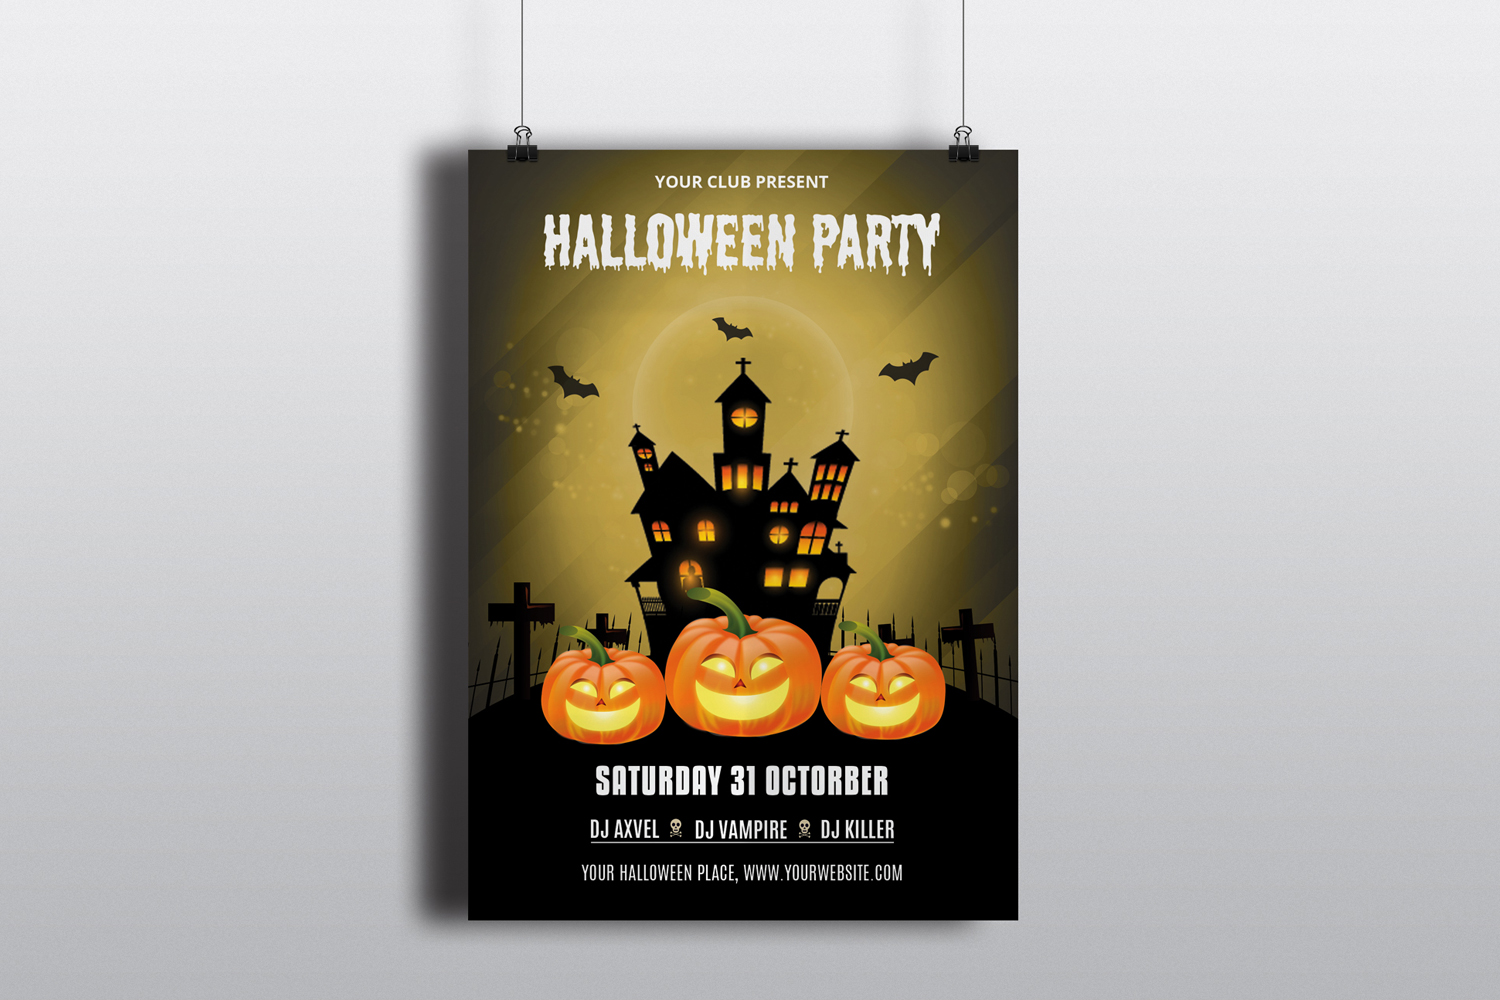 Halloween Party Invite Corporate Identity Template